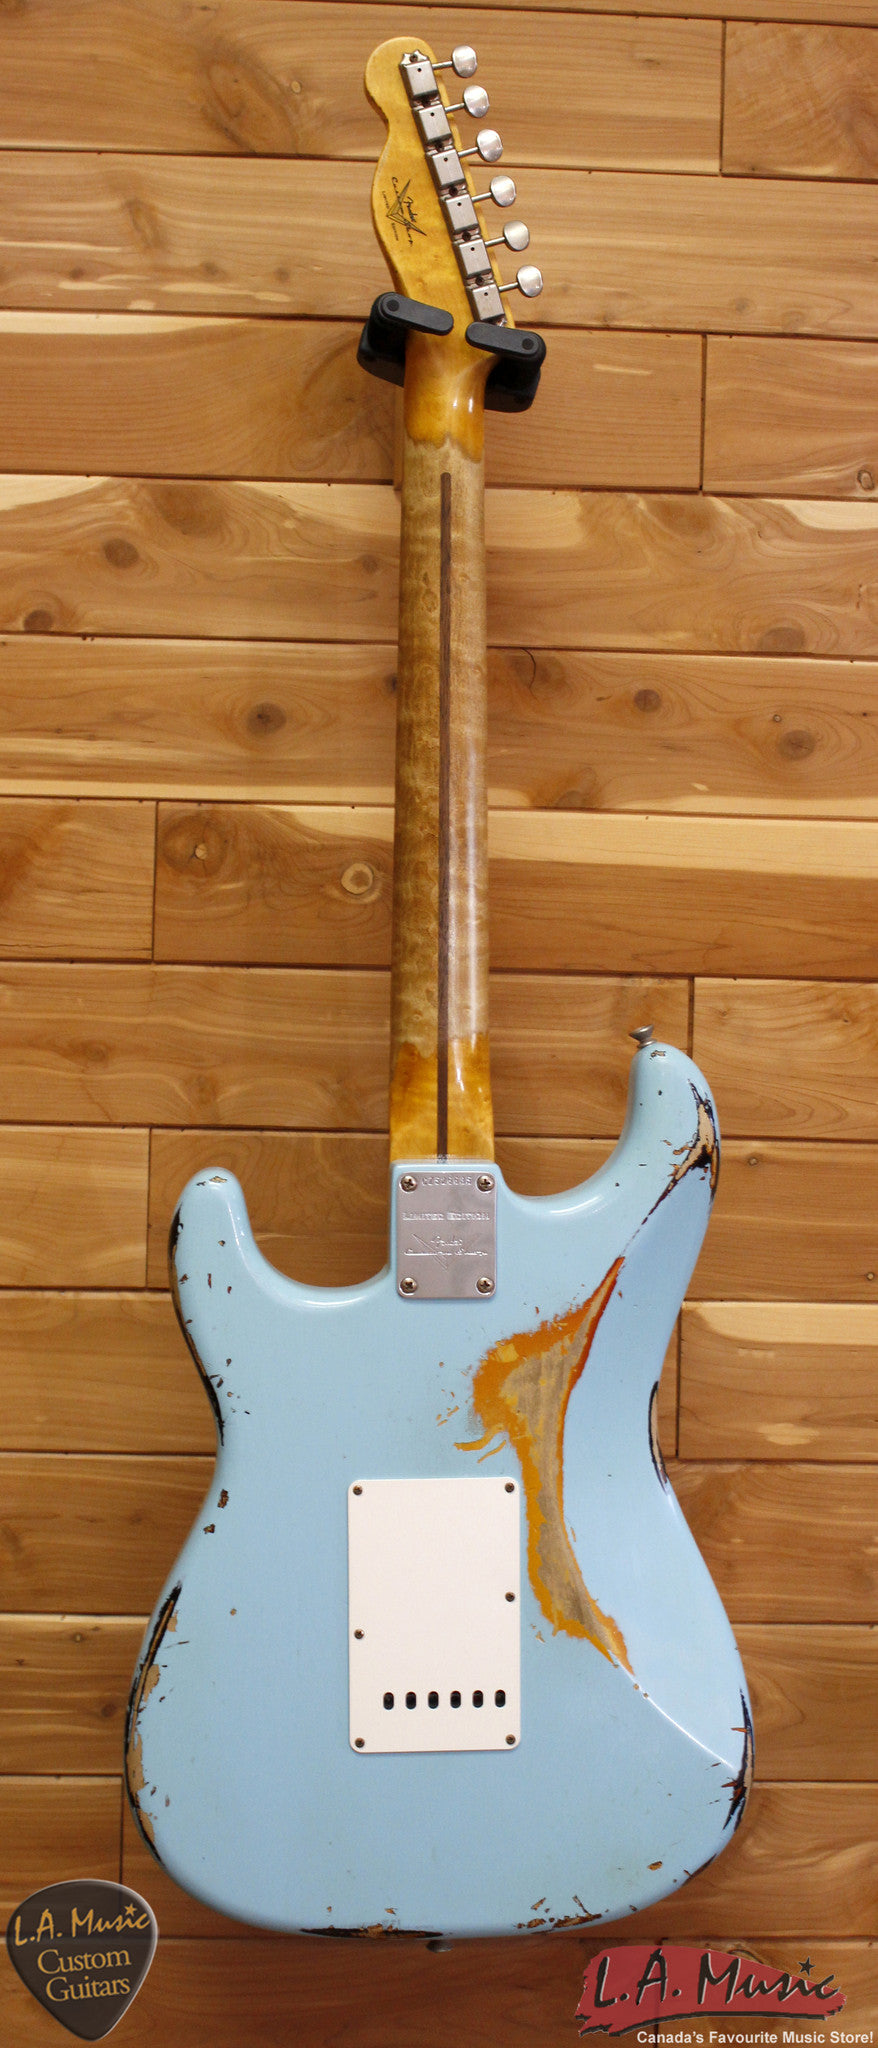 Fender Custom Shop Limited Edition Heavy Relic Mich Maker Daphne Blue Over 3-Tone Sunburst 1510060104 - L.A. Music - Canada's Favourite Music Store!